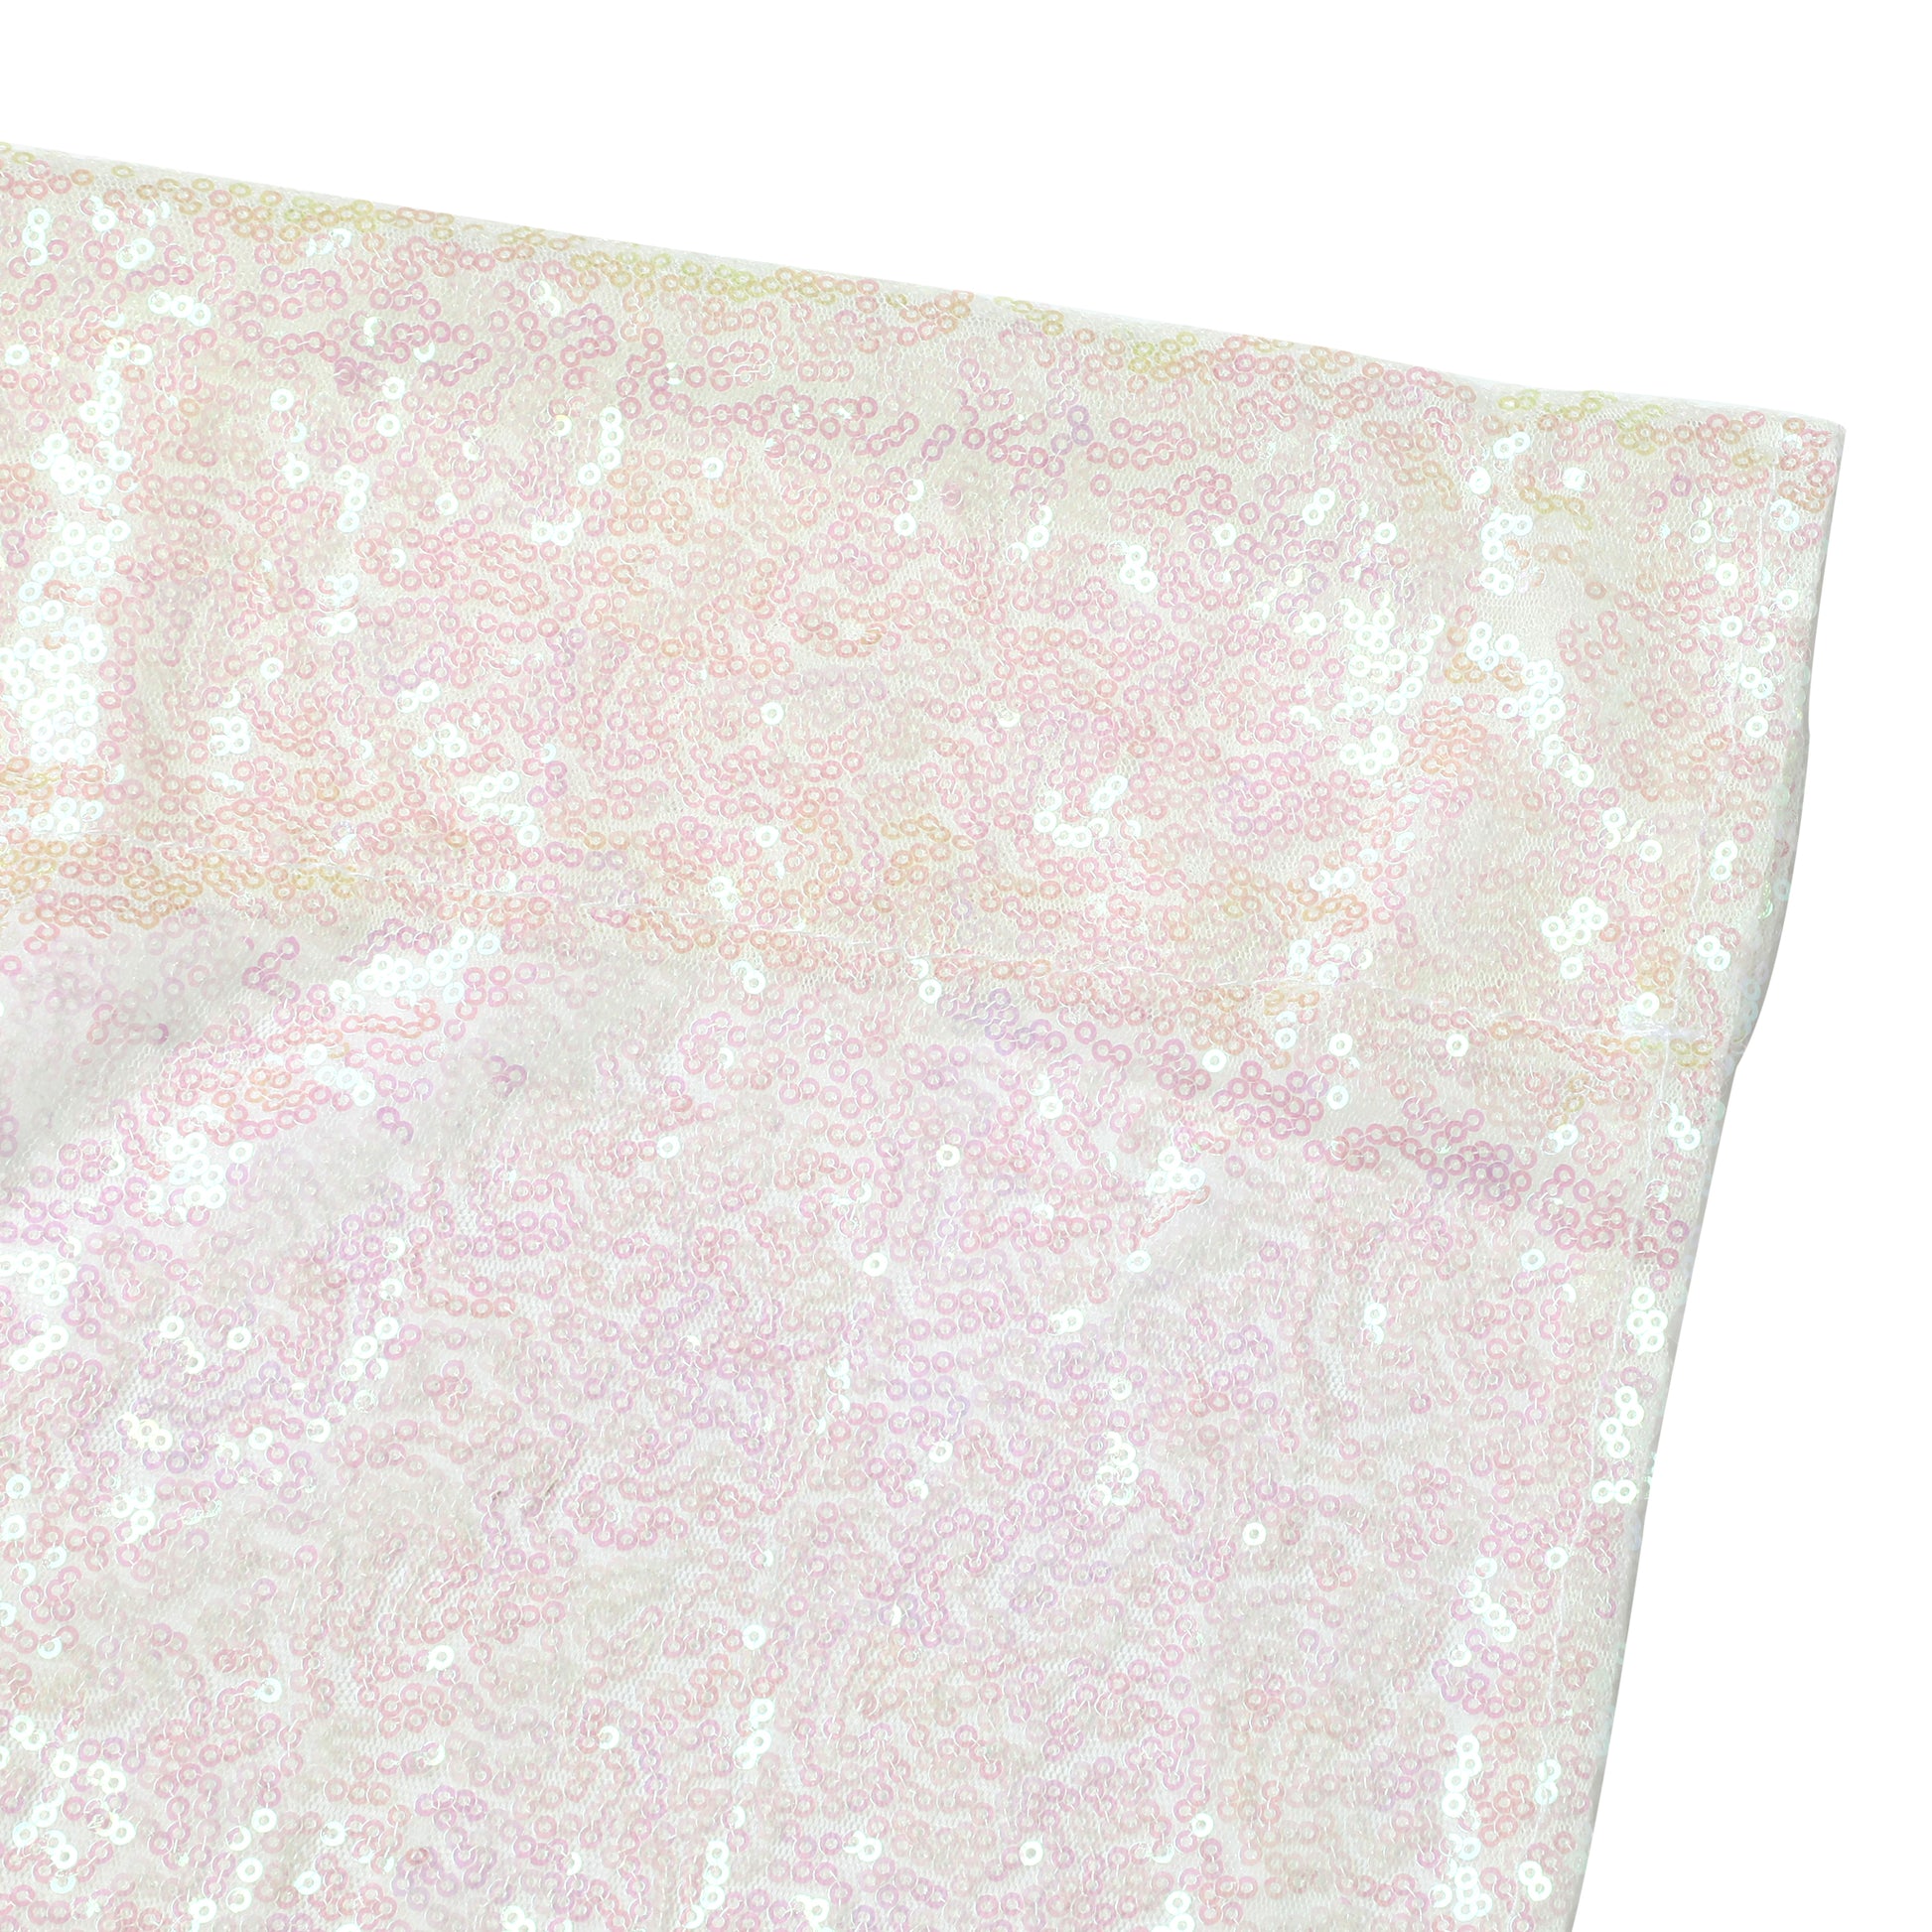 Glitz Sequin Mesh Net 10ft H x 52" W Drape/Backdrop panel - Iridescent White